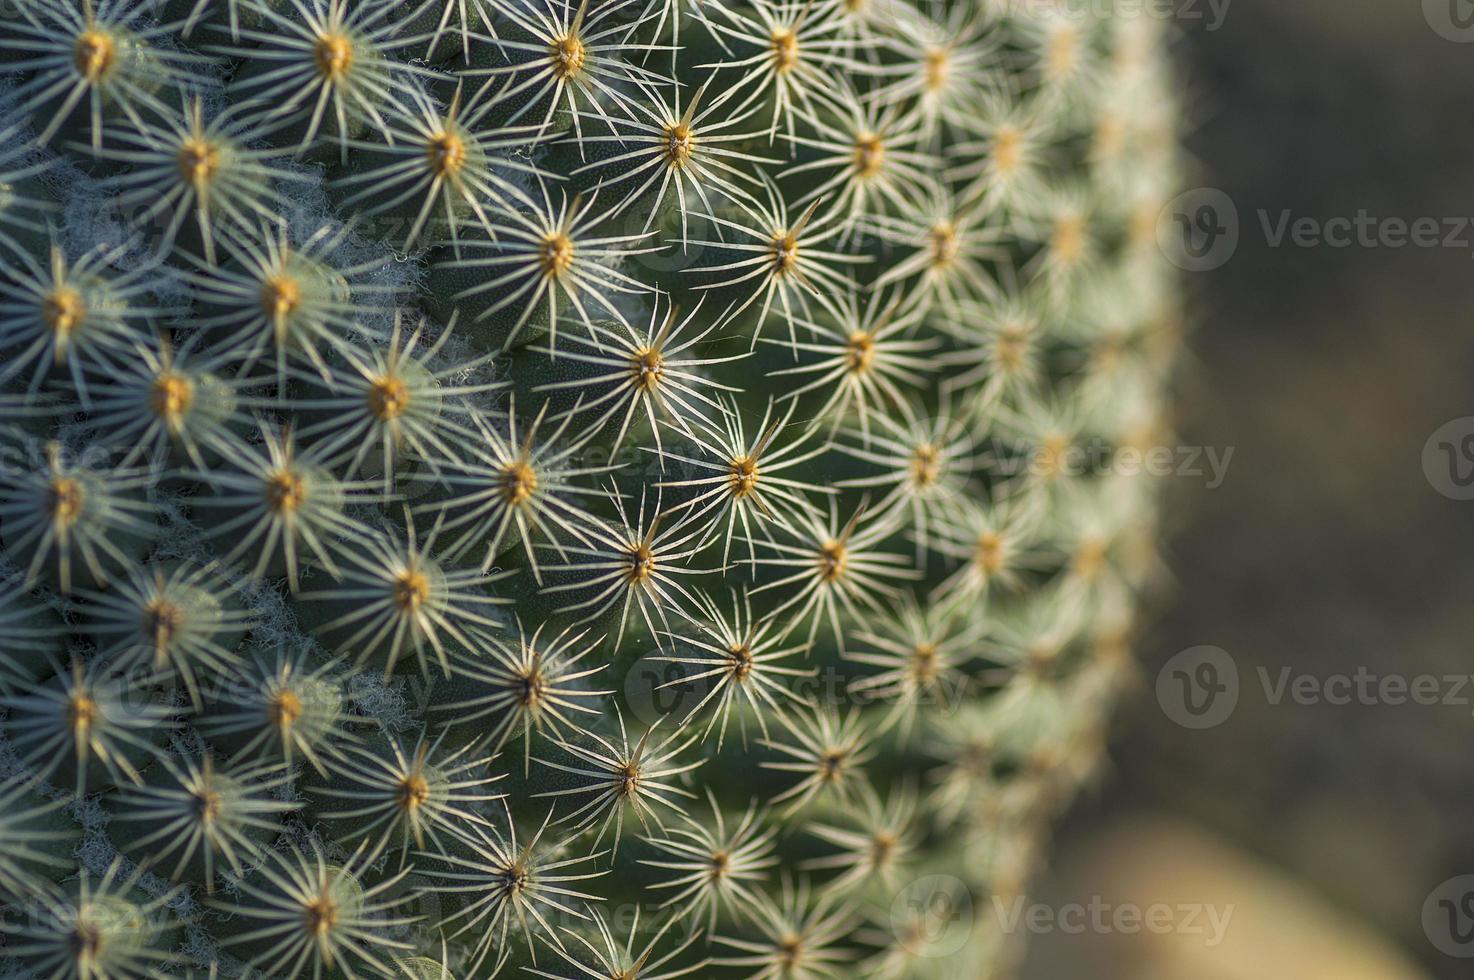 pianta di cactus nel parco foto